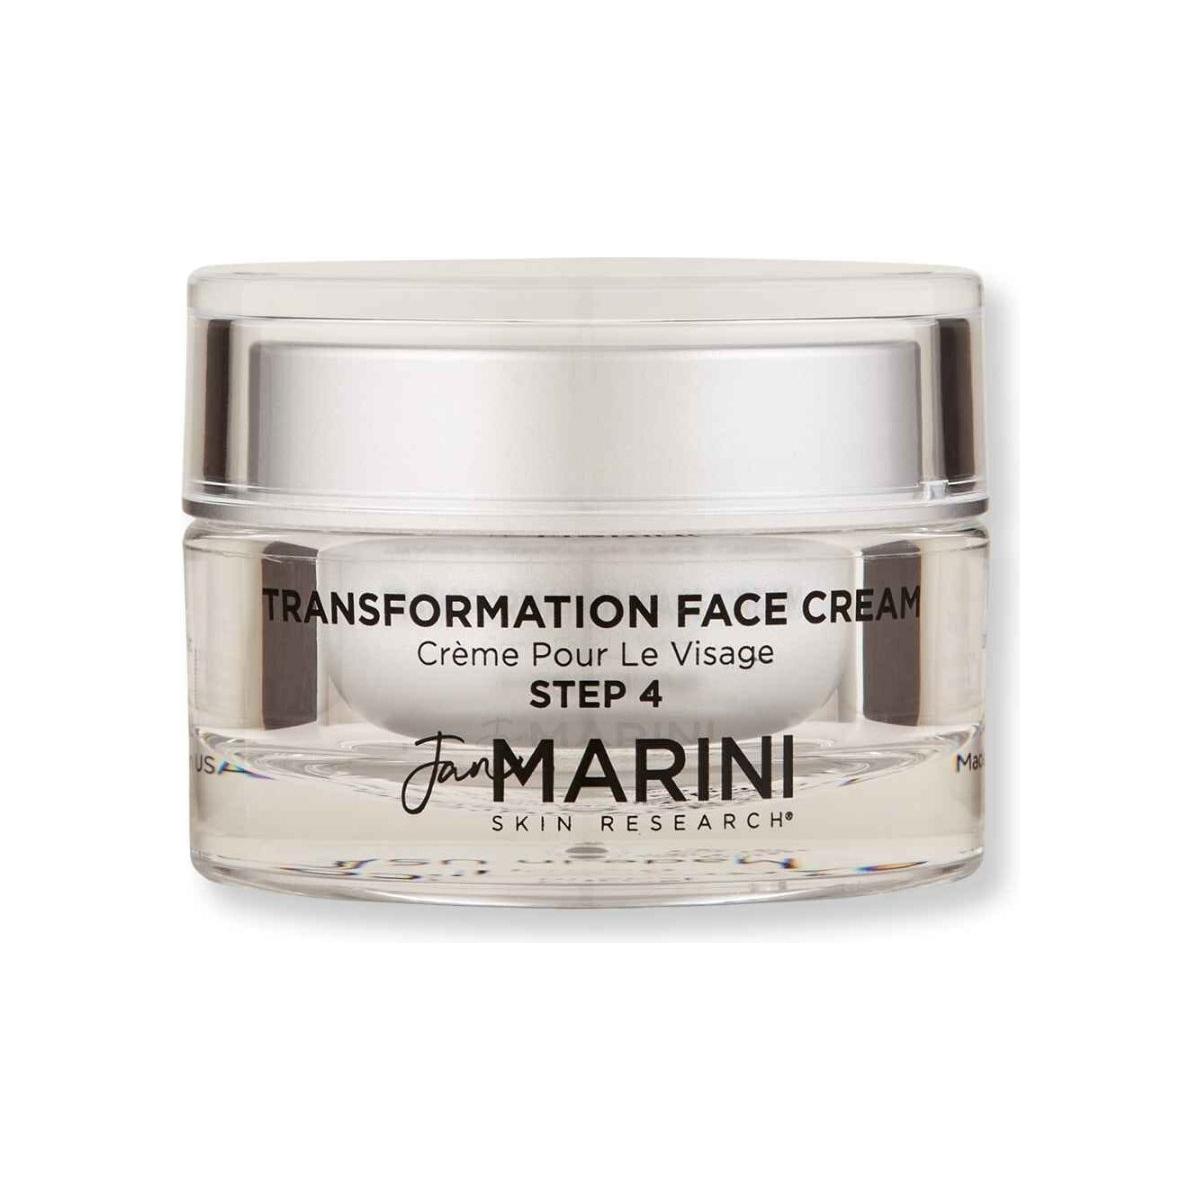 Jan Marini Transformation Face Cream 1 oz30 ml - Glam Global UK